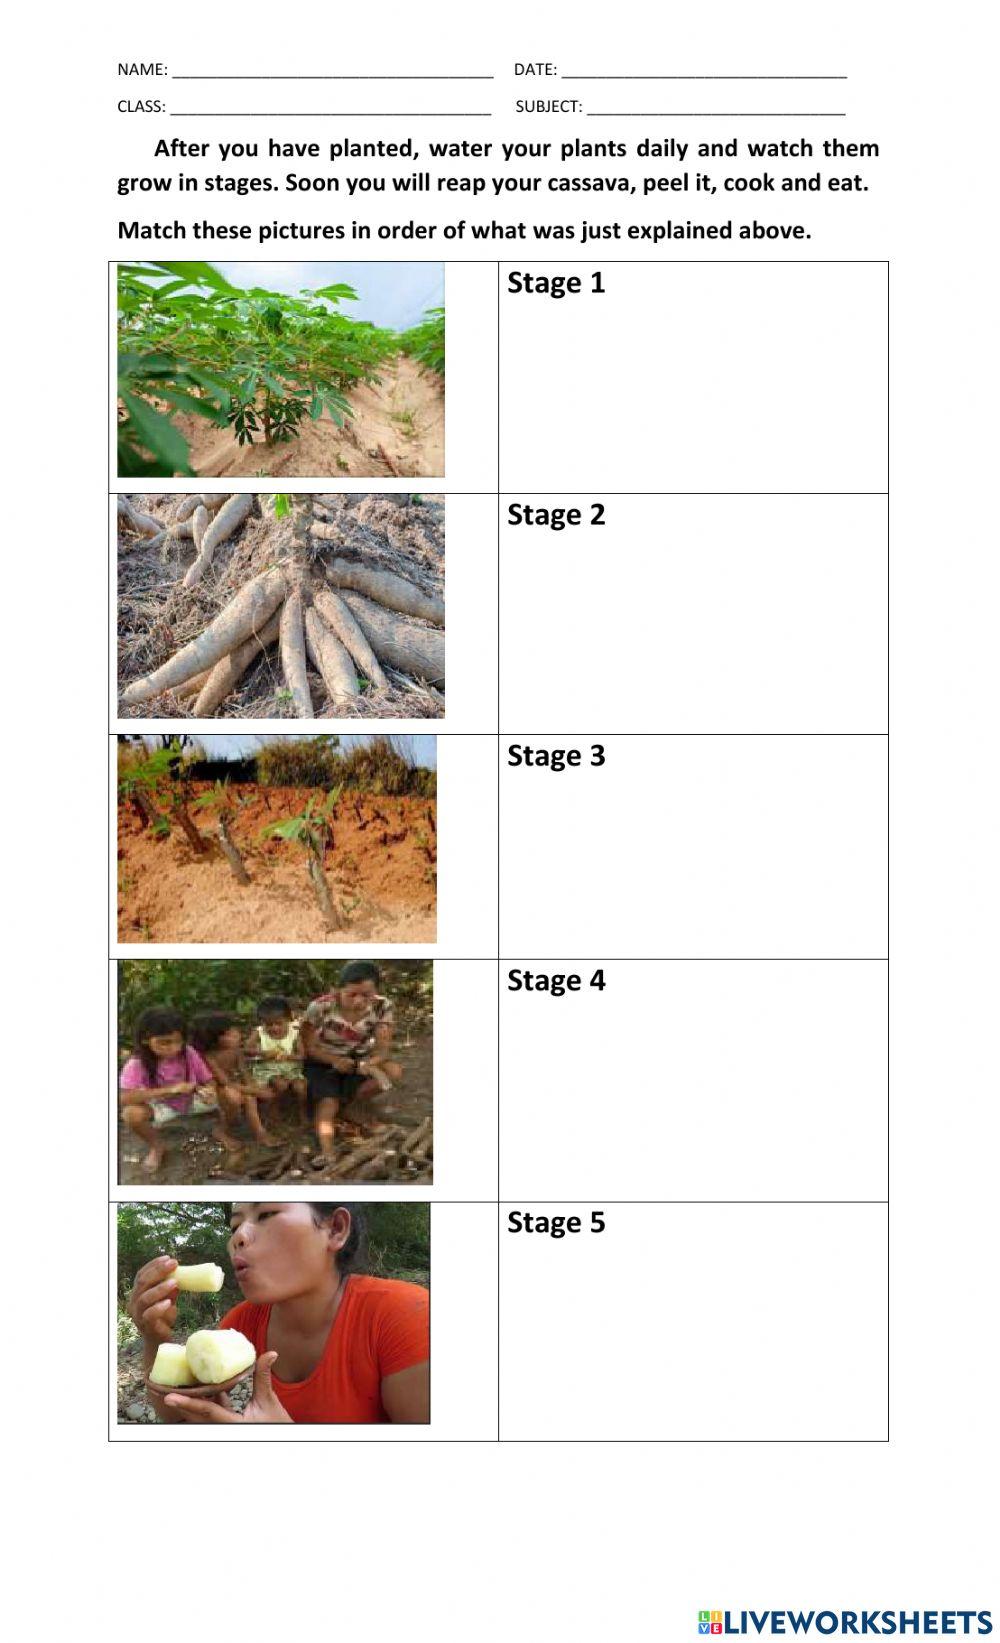 Planting Cassava